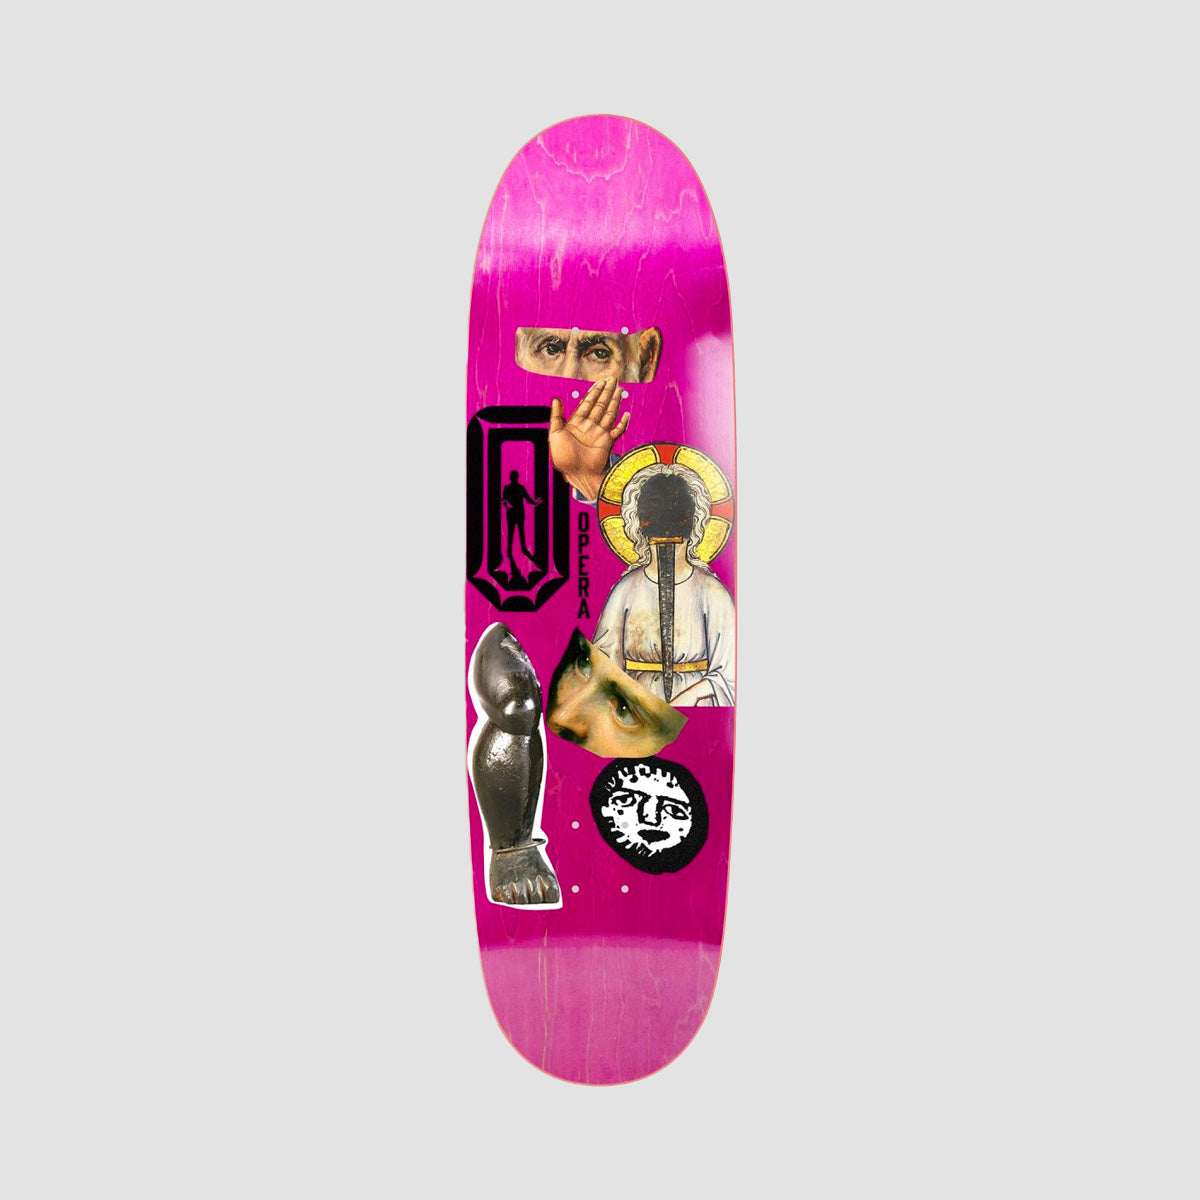 Opera Bit Ex7 Skateboard Deck Pink - 8.9"